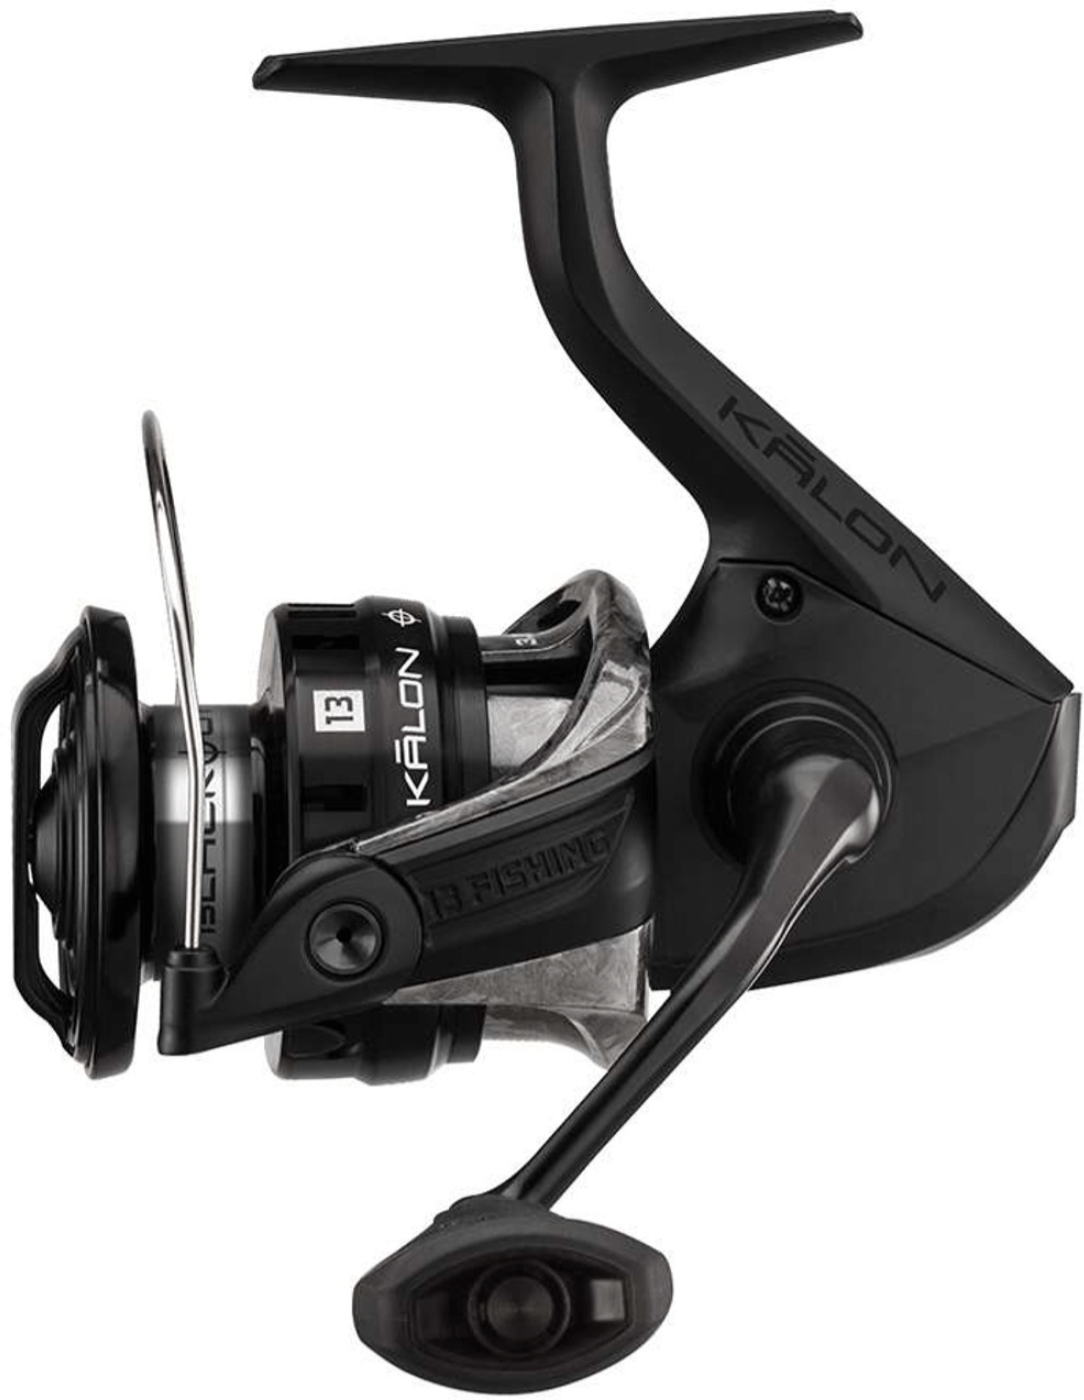 13 Fishing Fishing Rod 5.2:1 Gear  Ratio - Size 3.0 Kalon O Blackout Spinning Reel